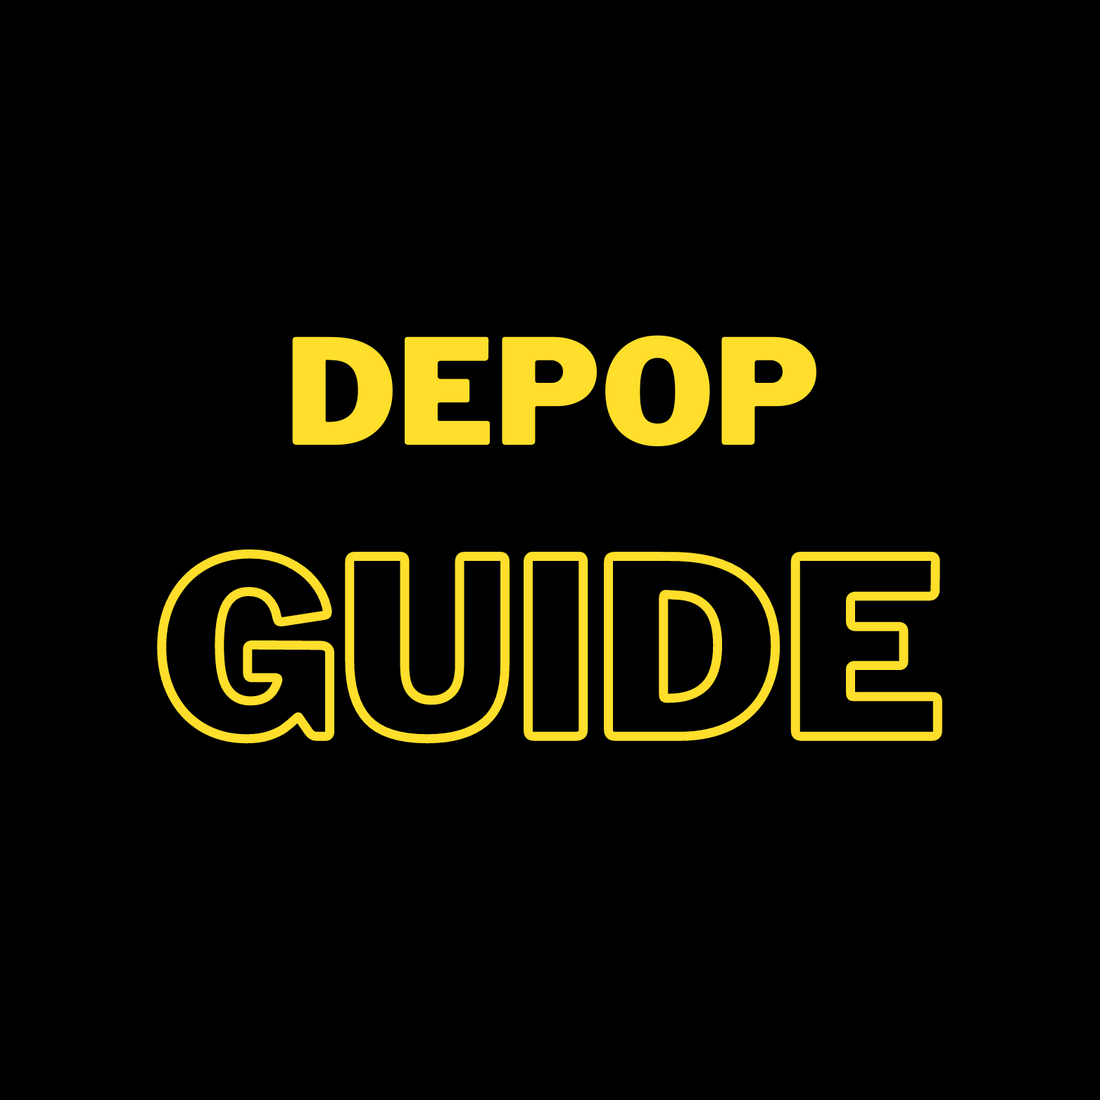 free Depop eBay and Vinted guide